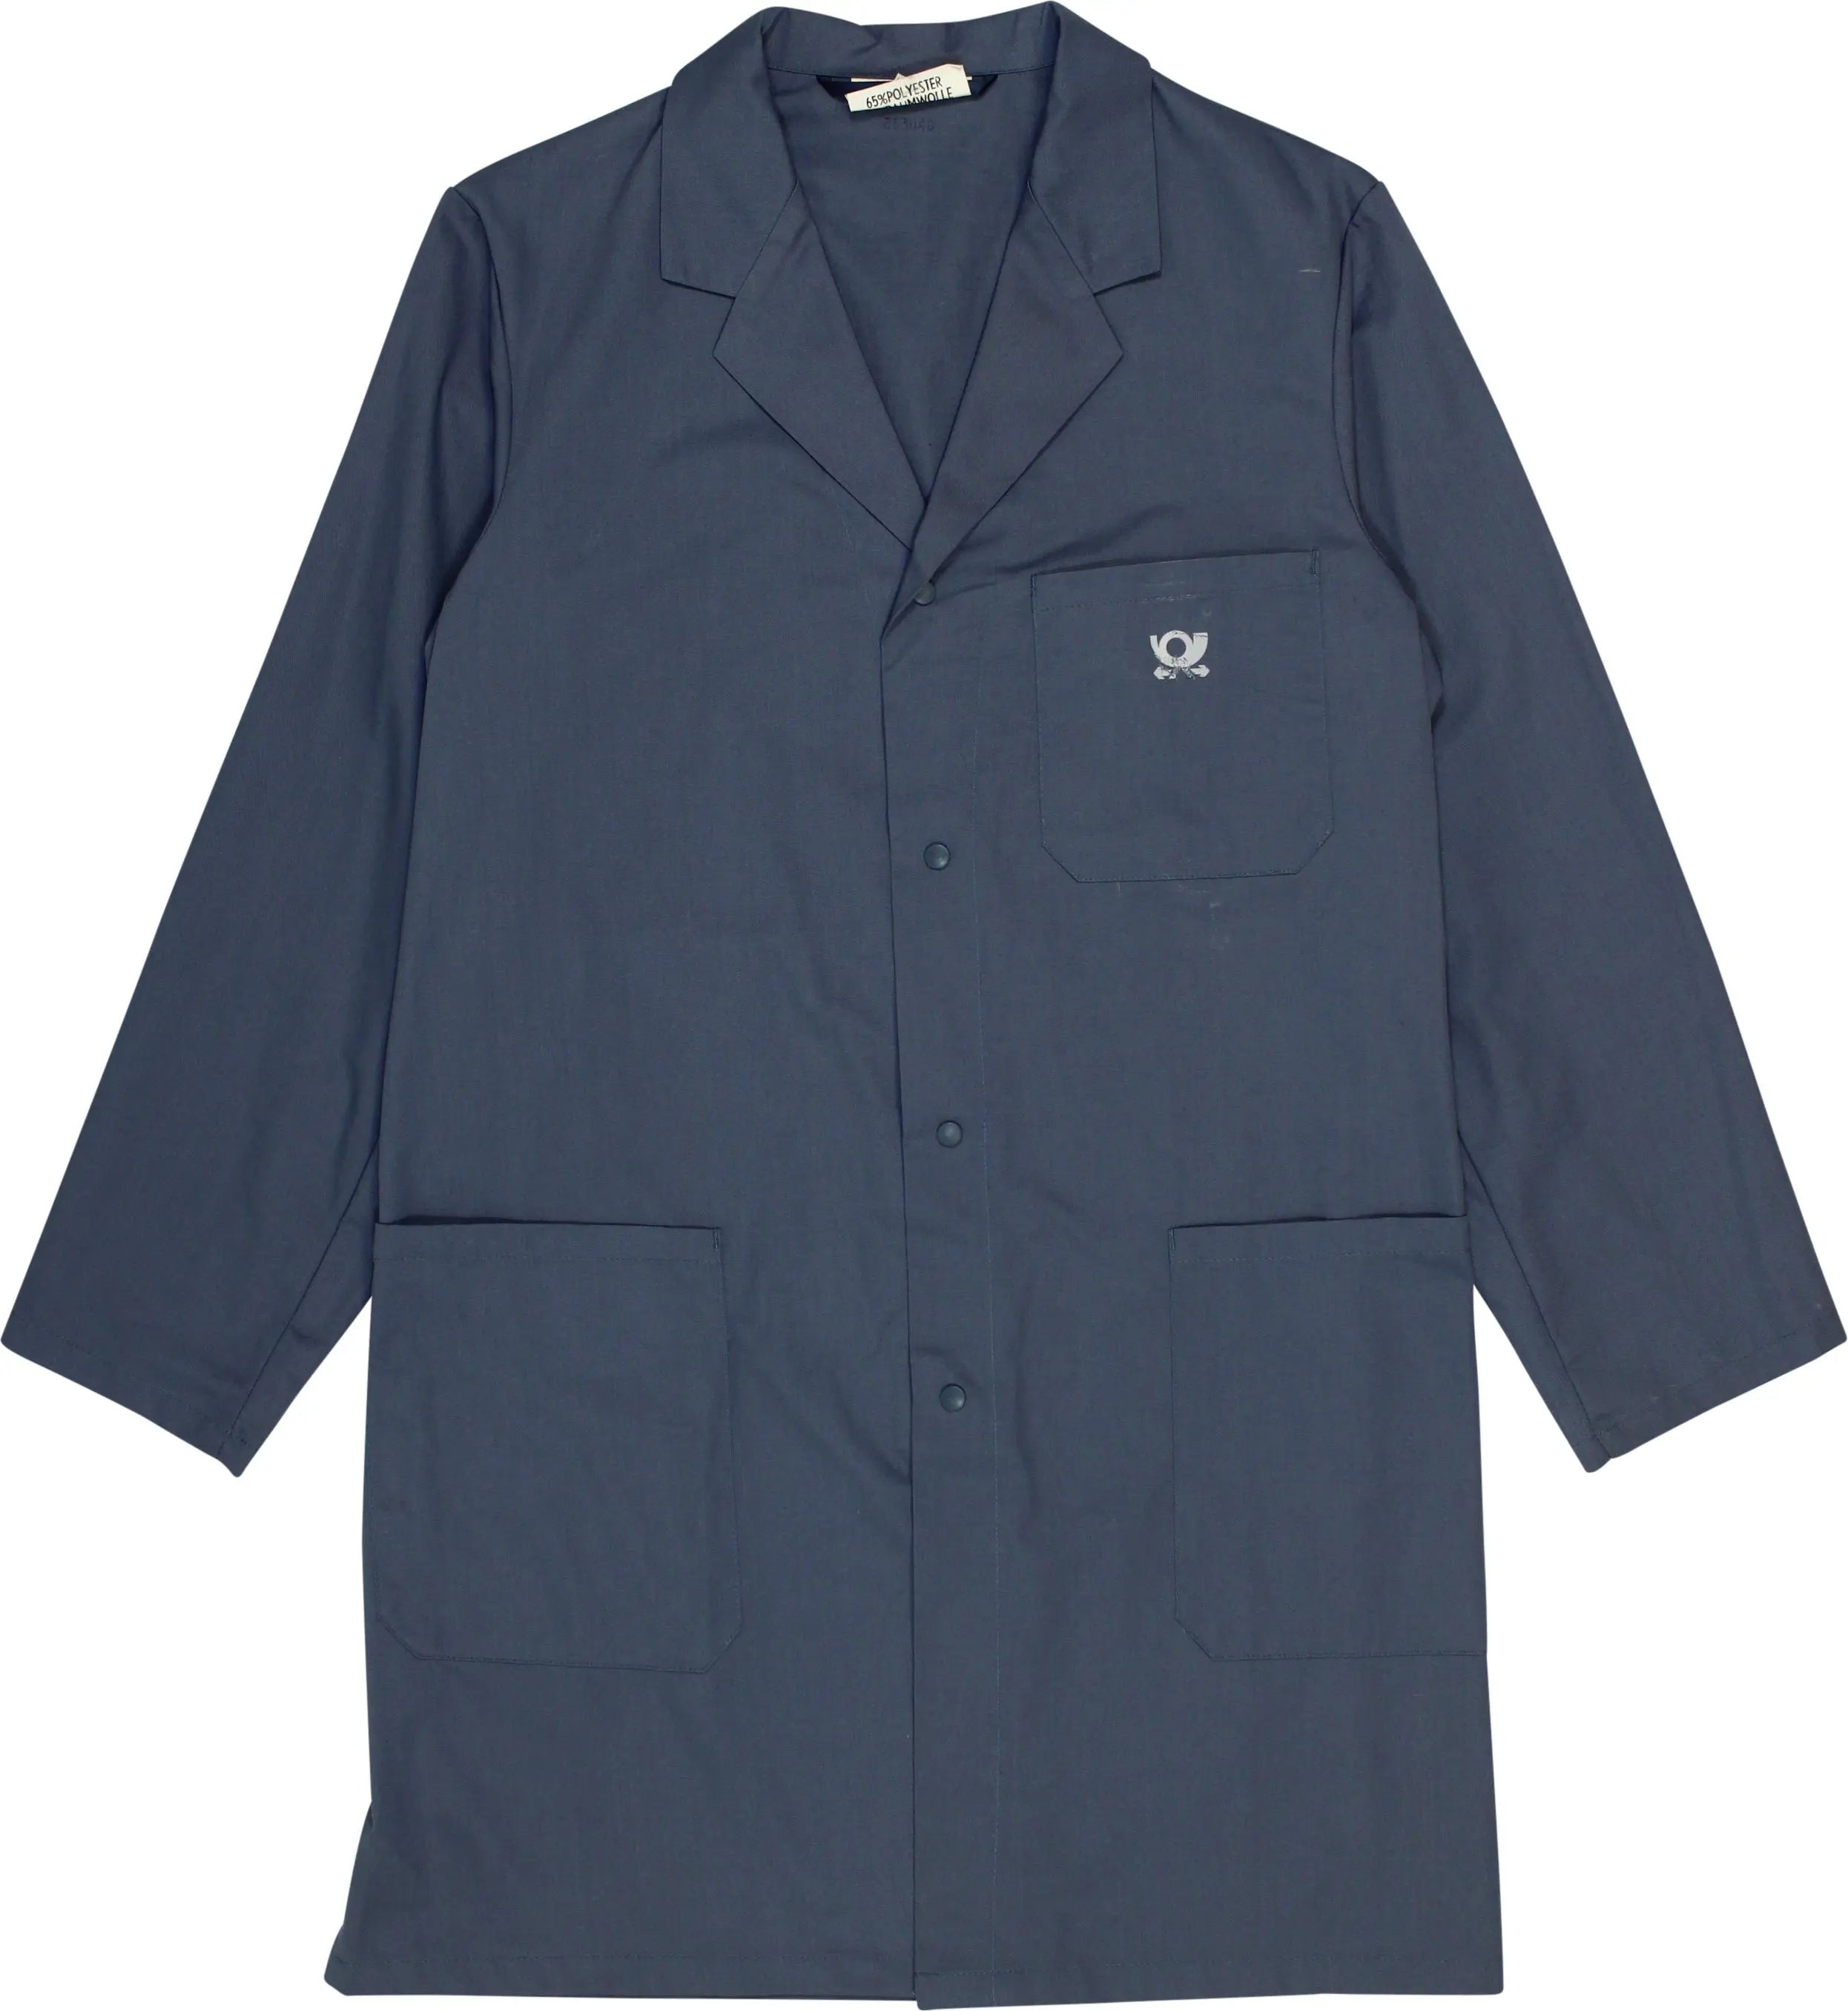 B+U Wolfsburg - Workwear Jacket- ThriftTale.com - Vintage and second handclothing